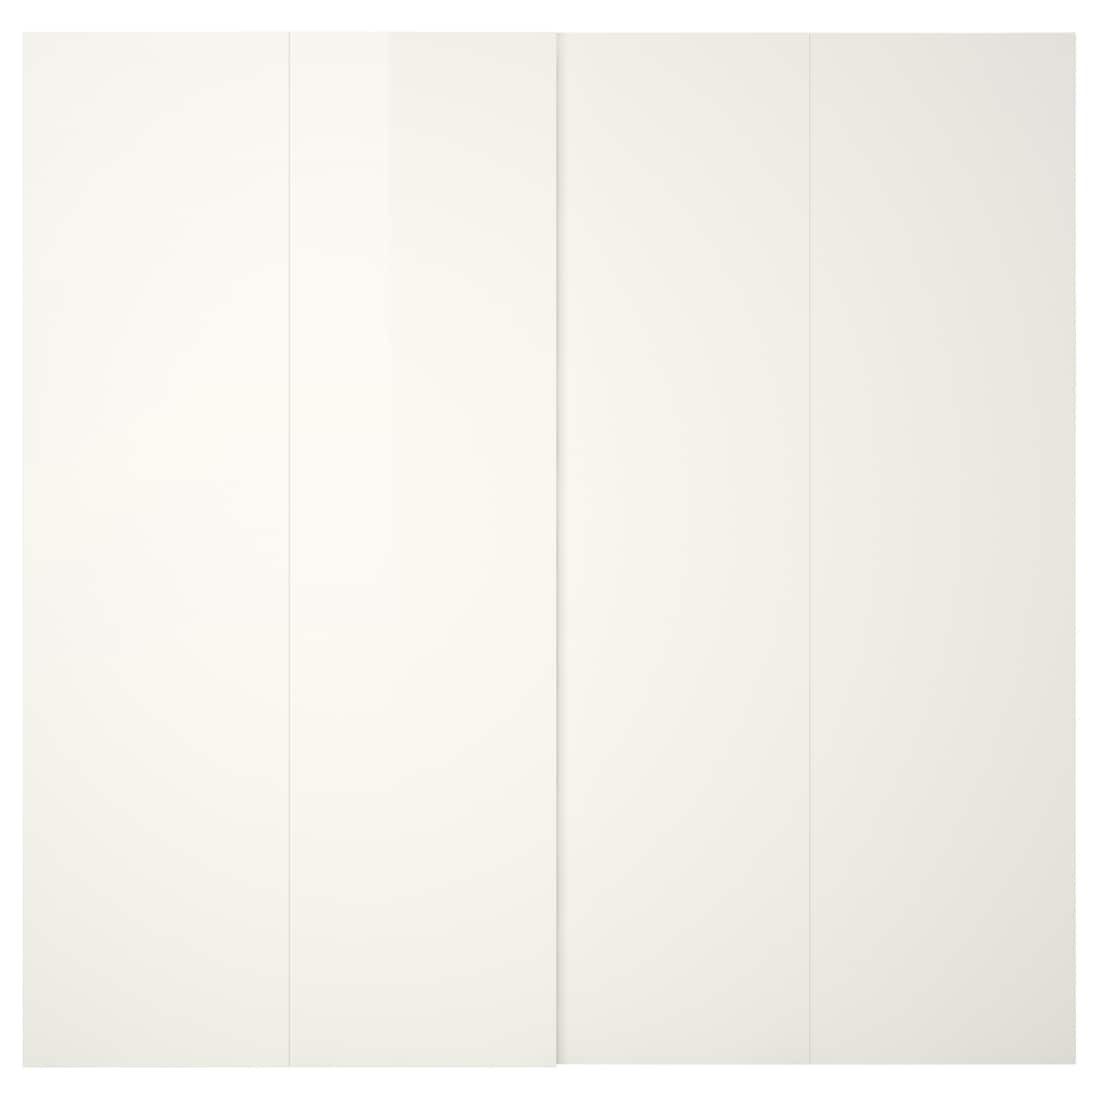 HASVIK ХАСВИК Пара раздвижных дверей, глянцевый белый, 200x236 см